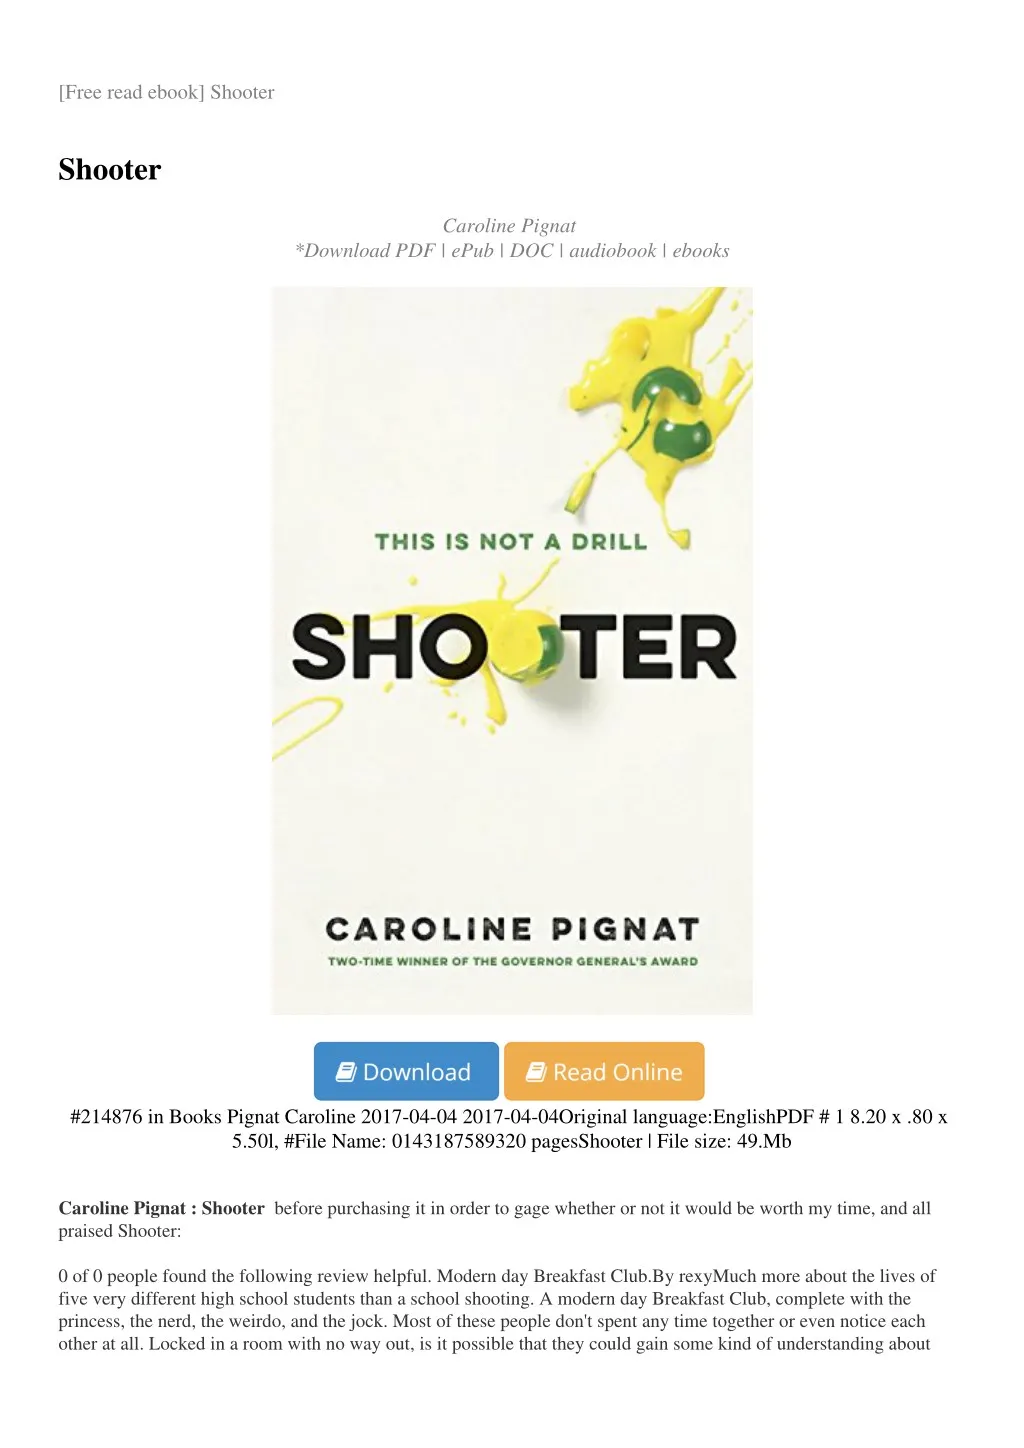 free read ebook shooter